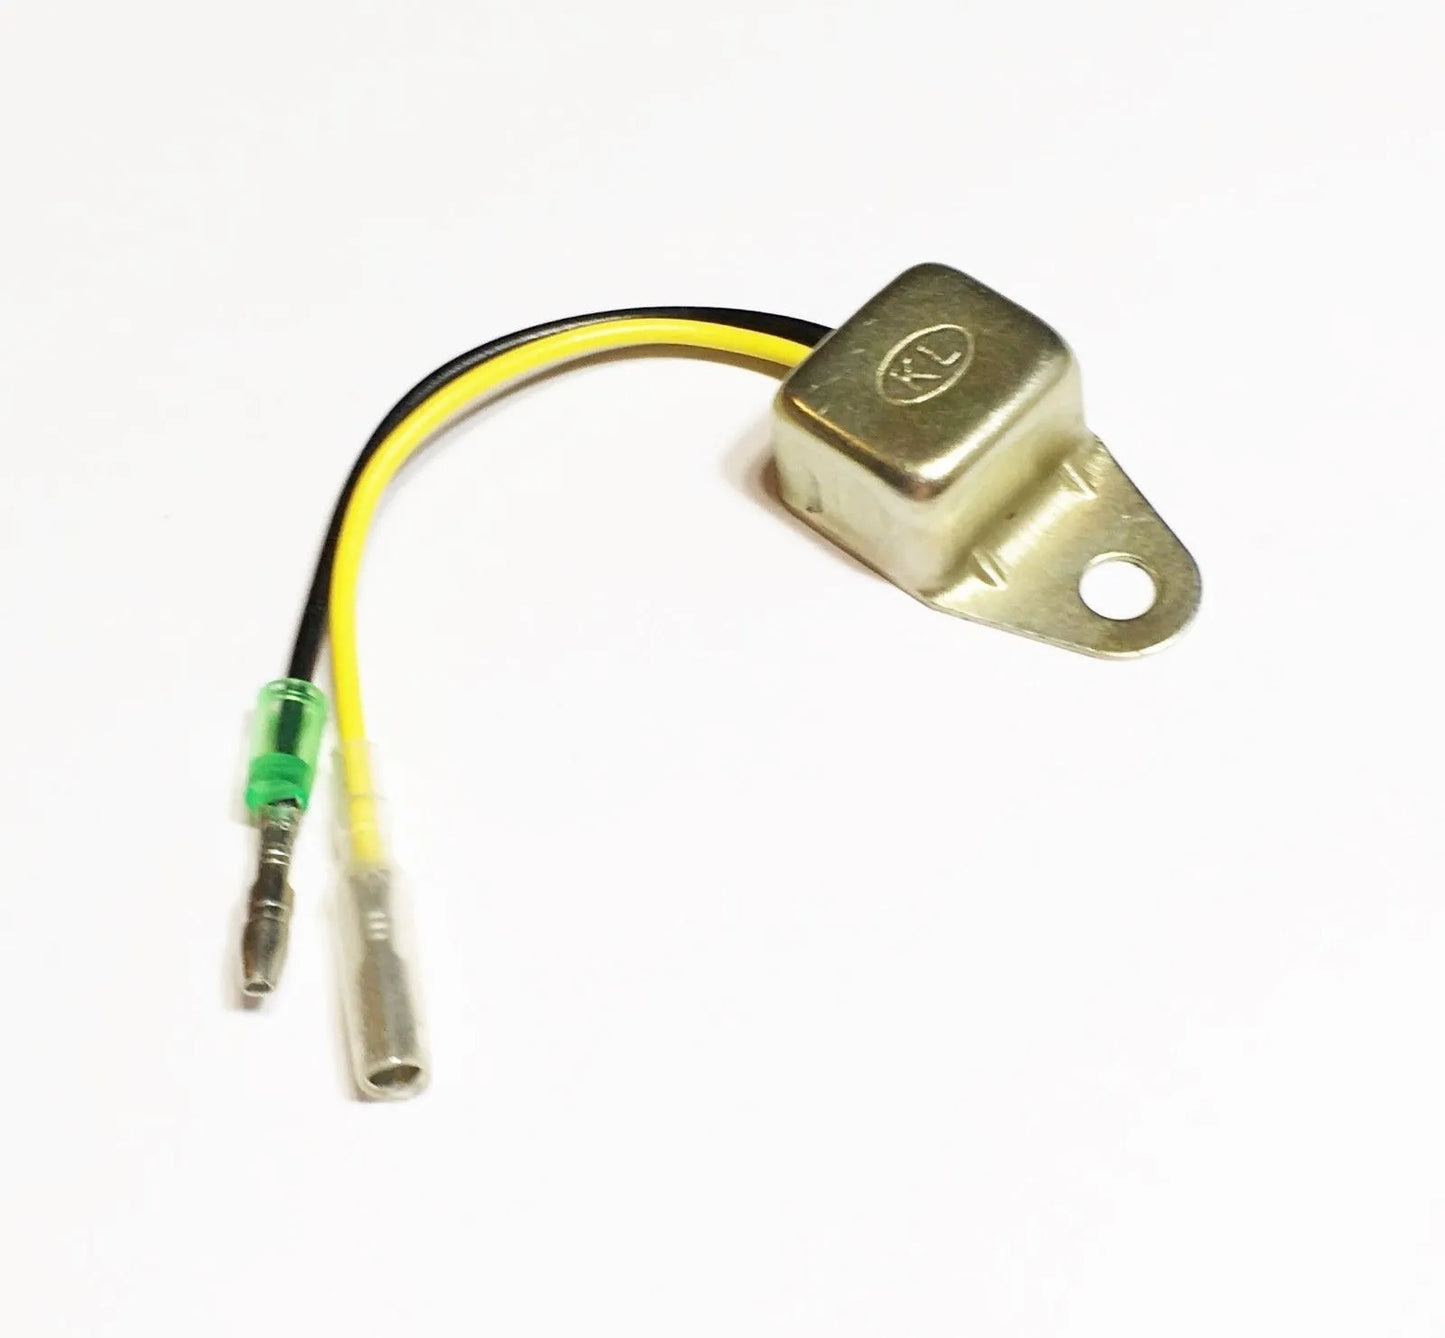 Proven Part Low Oil Alert Sensor Switch For Gx100 Gx120 Gx140 Gx140 Gx160 Gx200 Gx240 Gx270 Gx340 Gx390